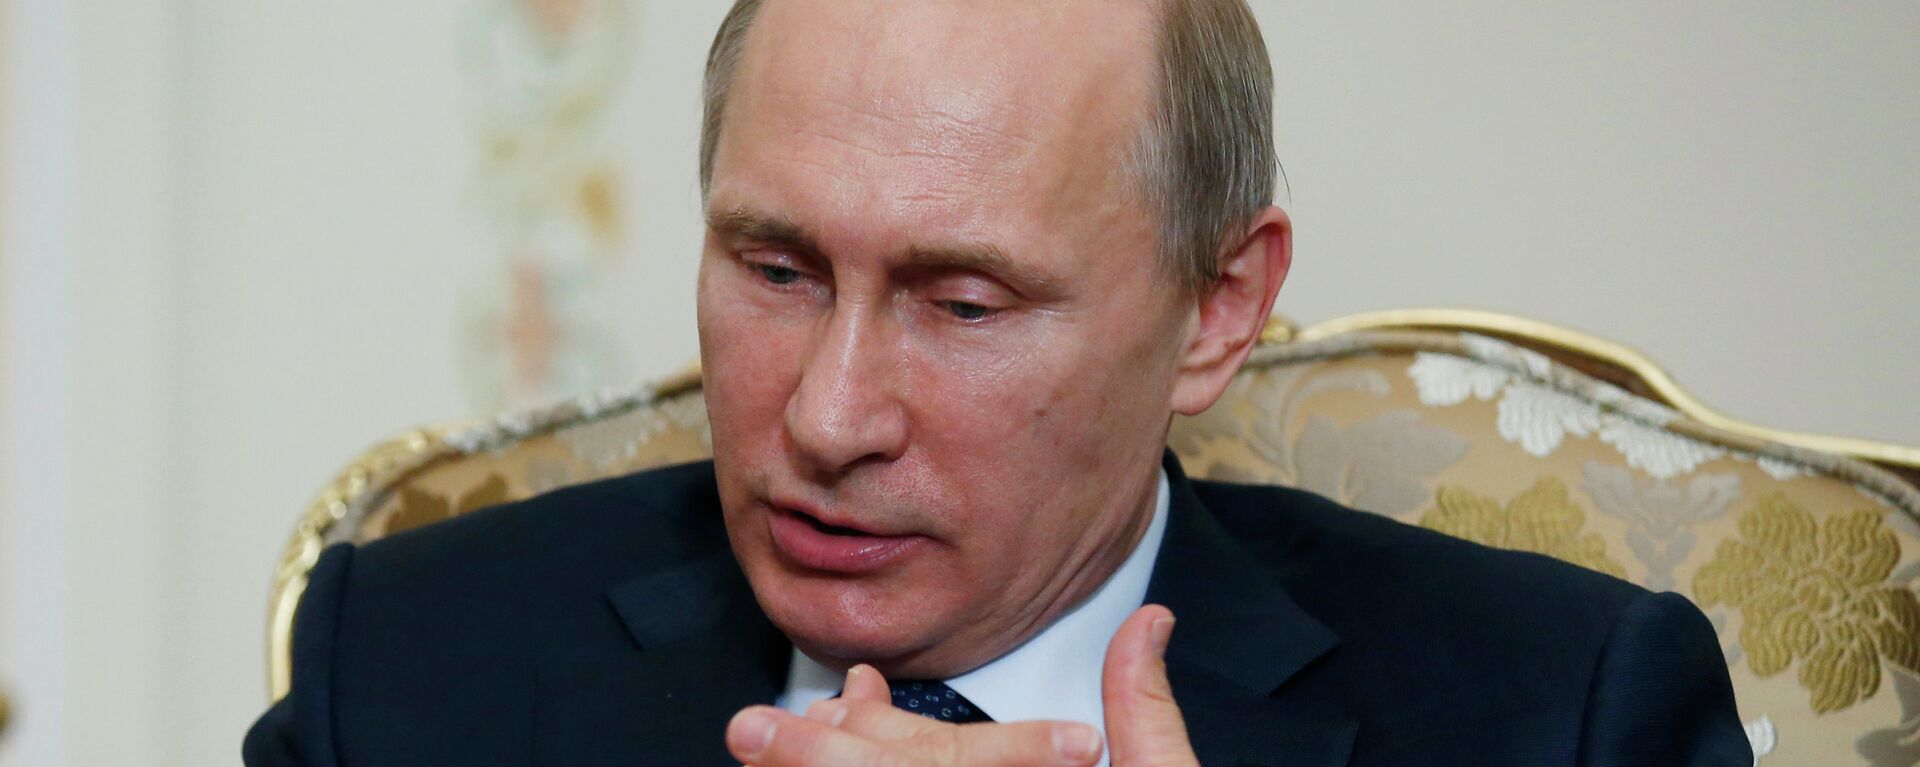 Ruski predsednik Vladimir Putin - Sputnik Srbija, 1920, 30.04.2015